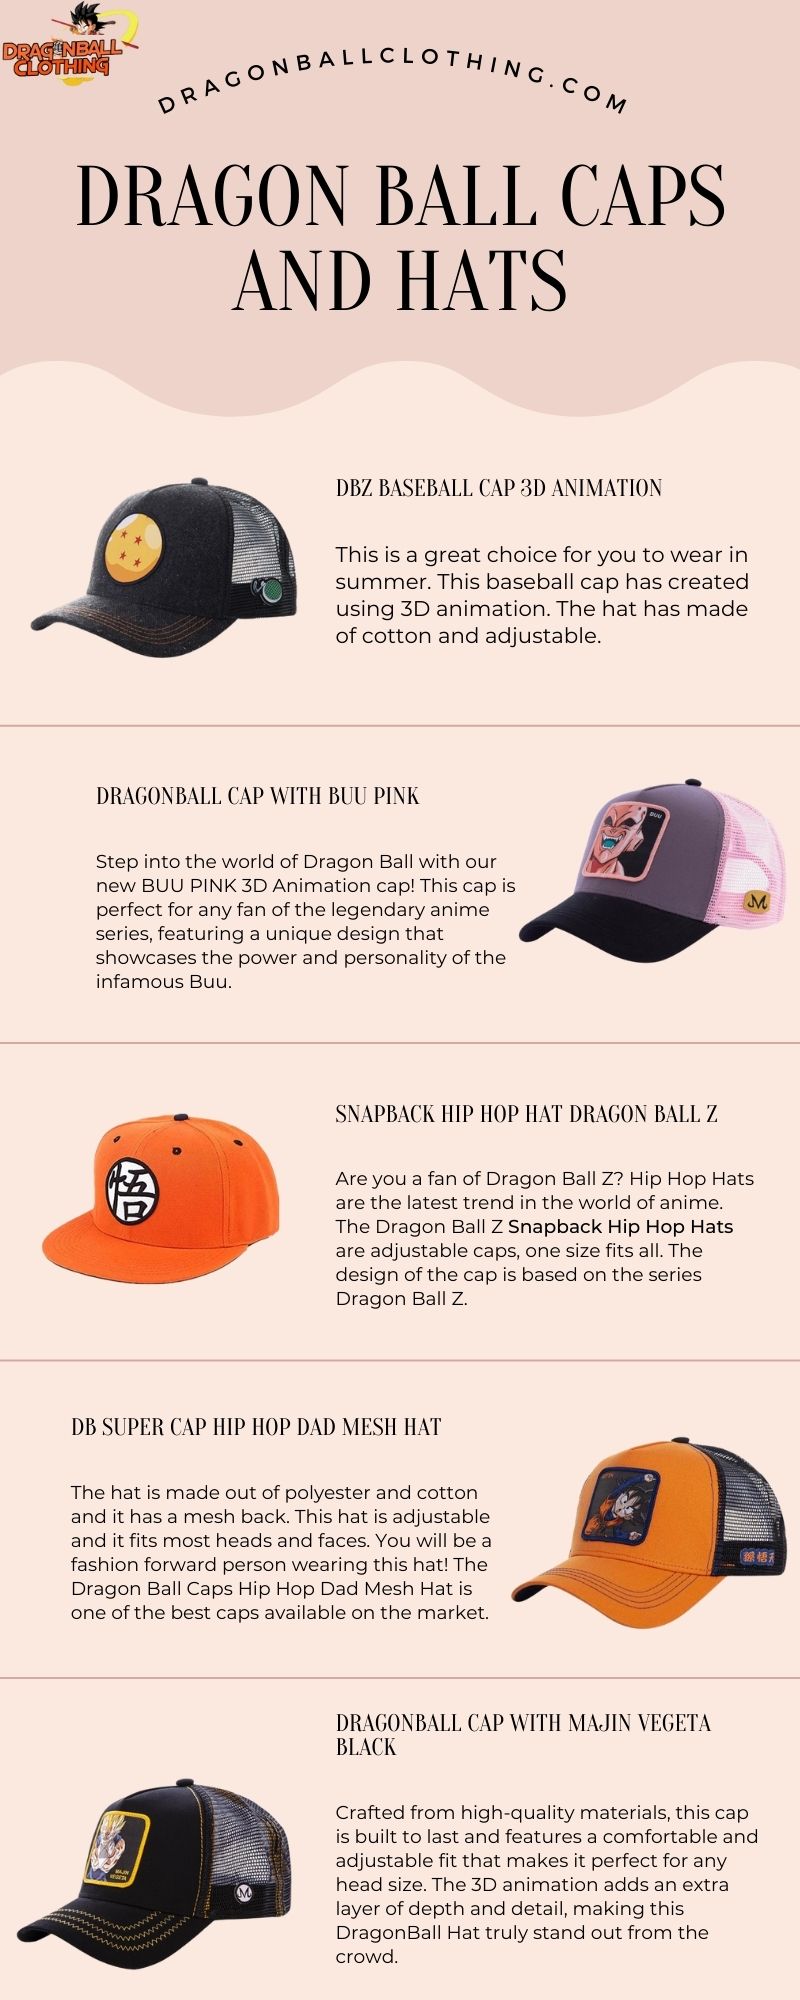 Dragon Ball Caps and Hats